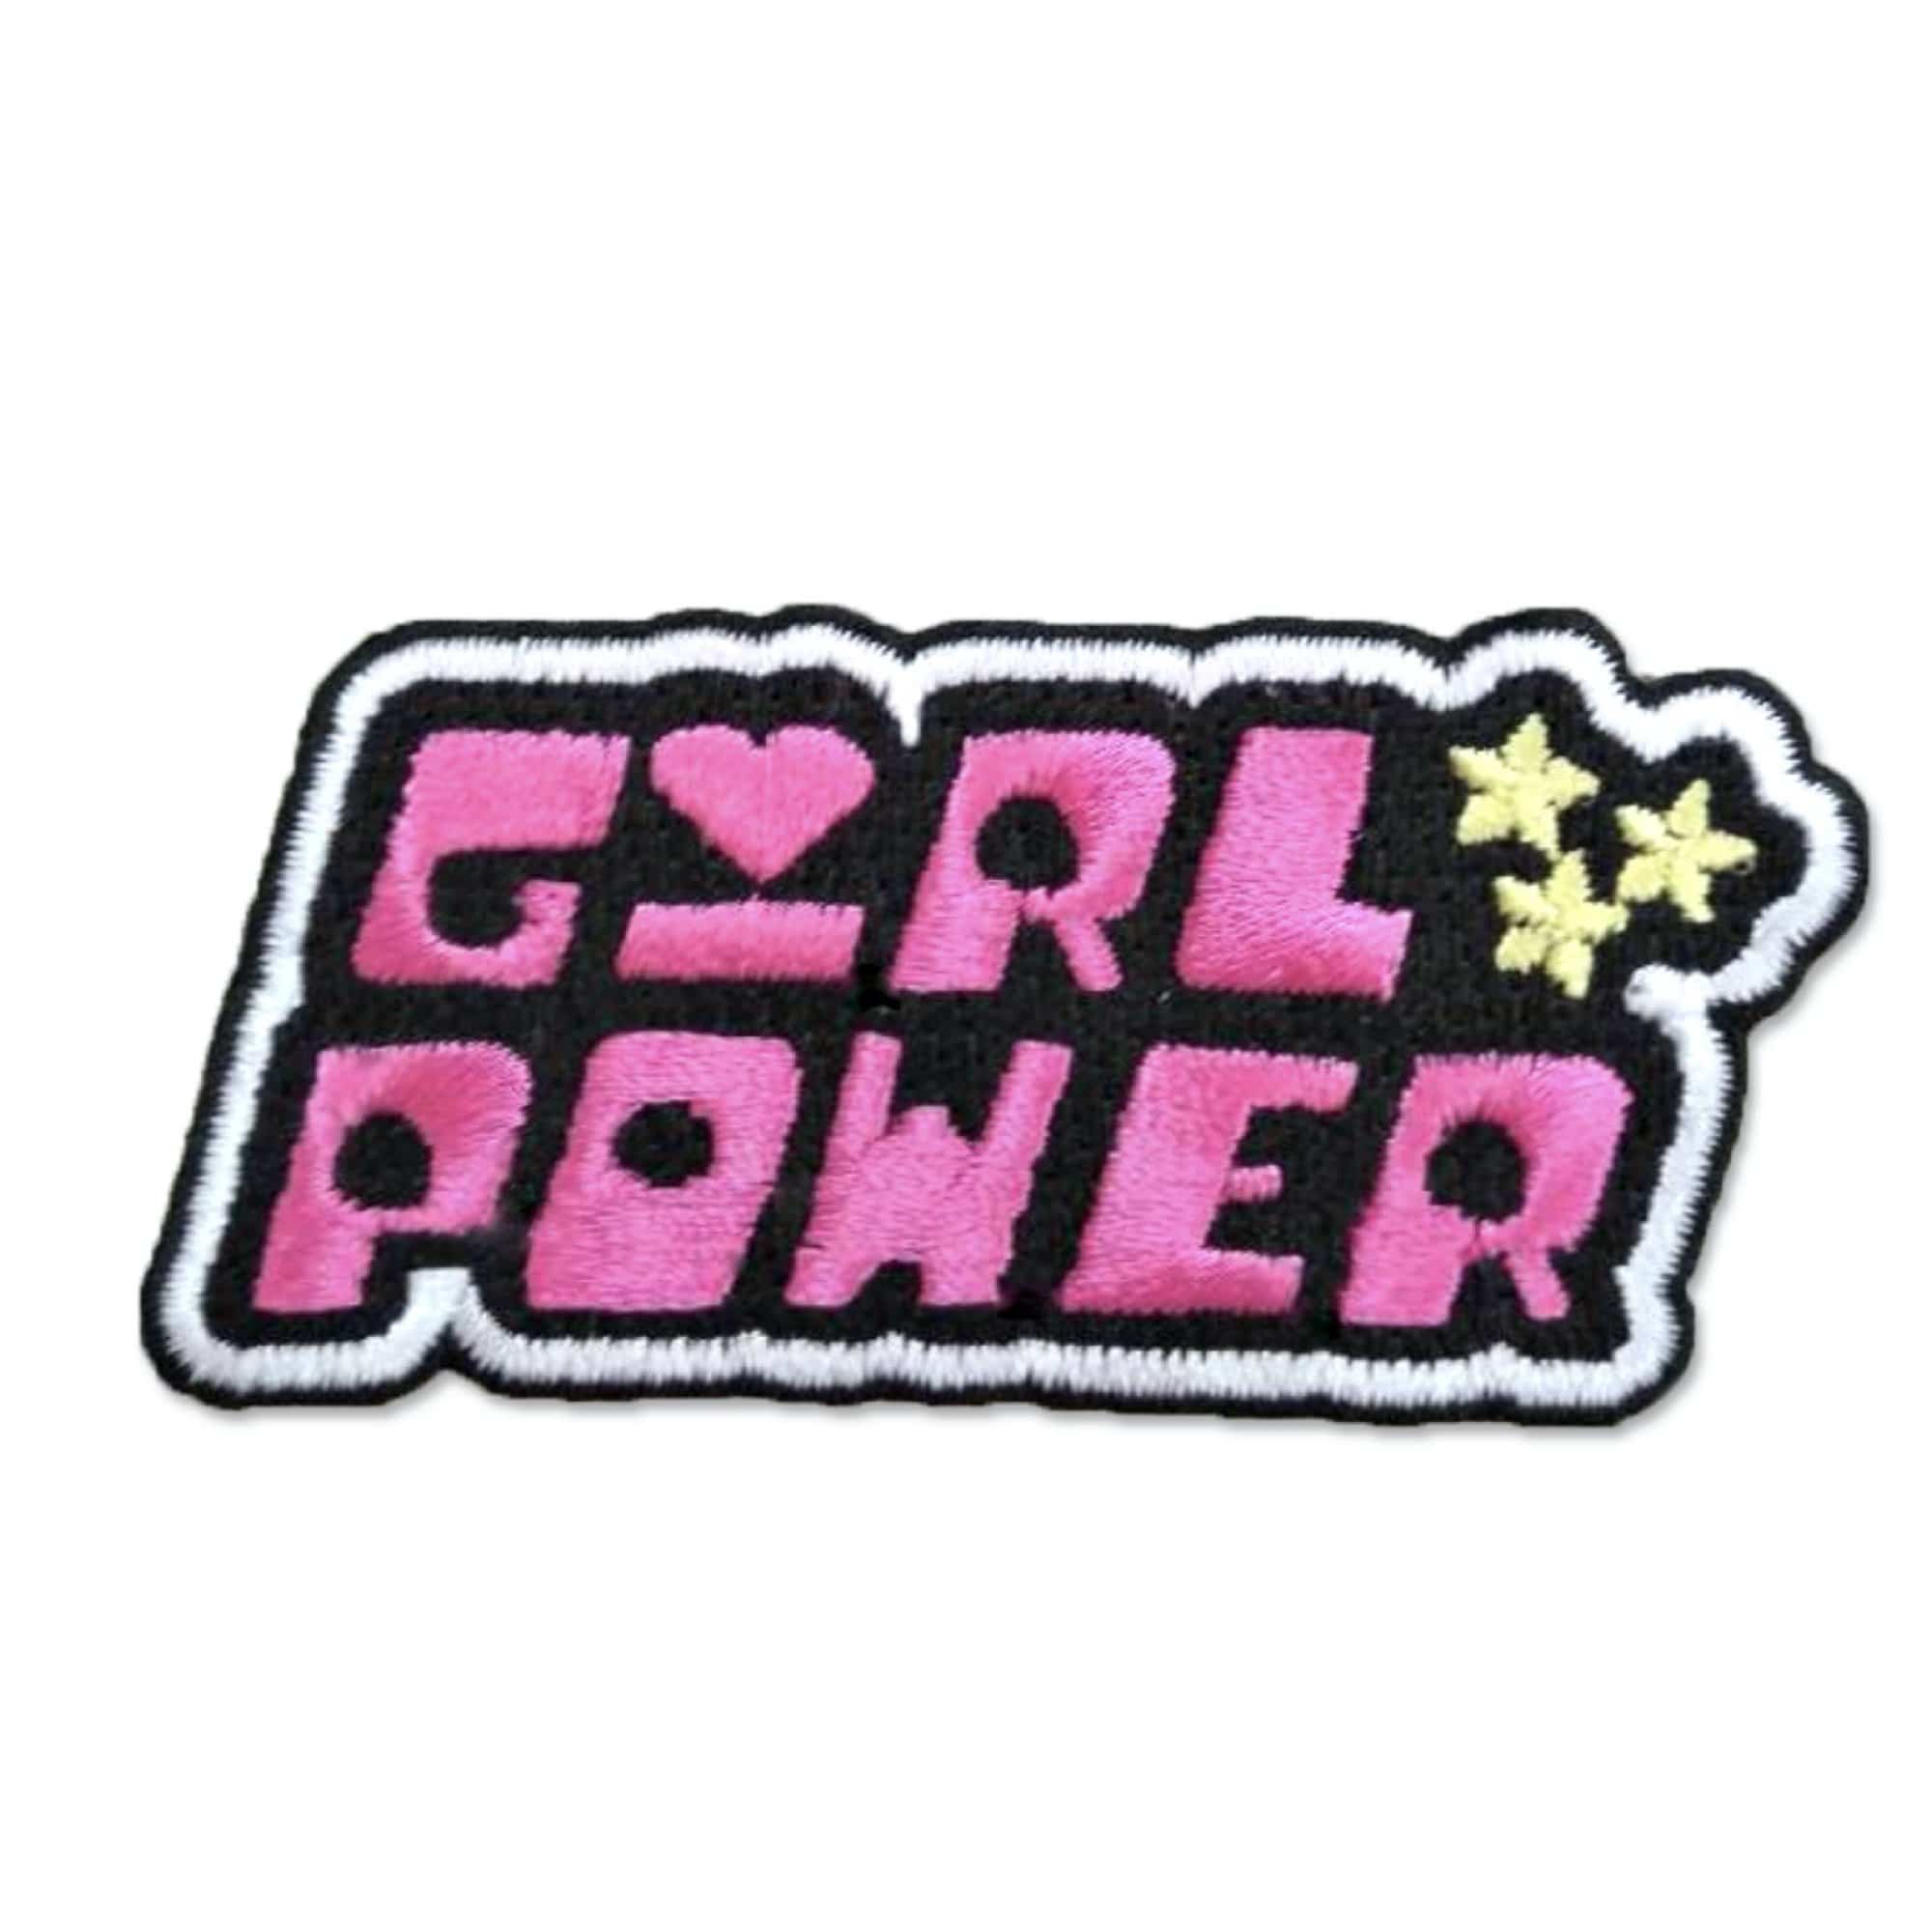 cuddlefish Girl Power patch